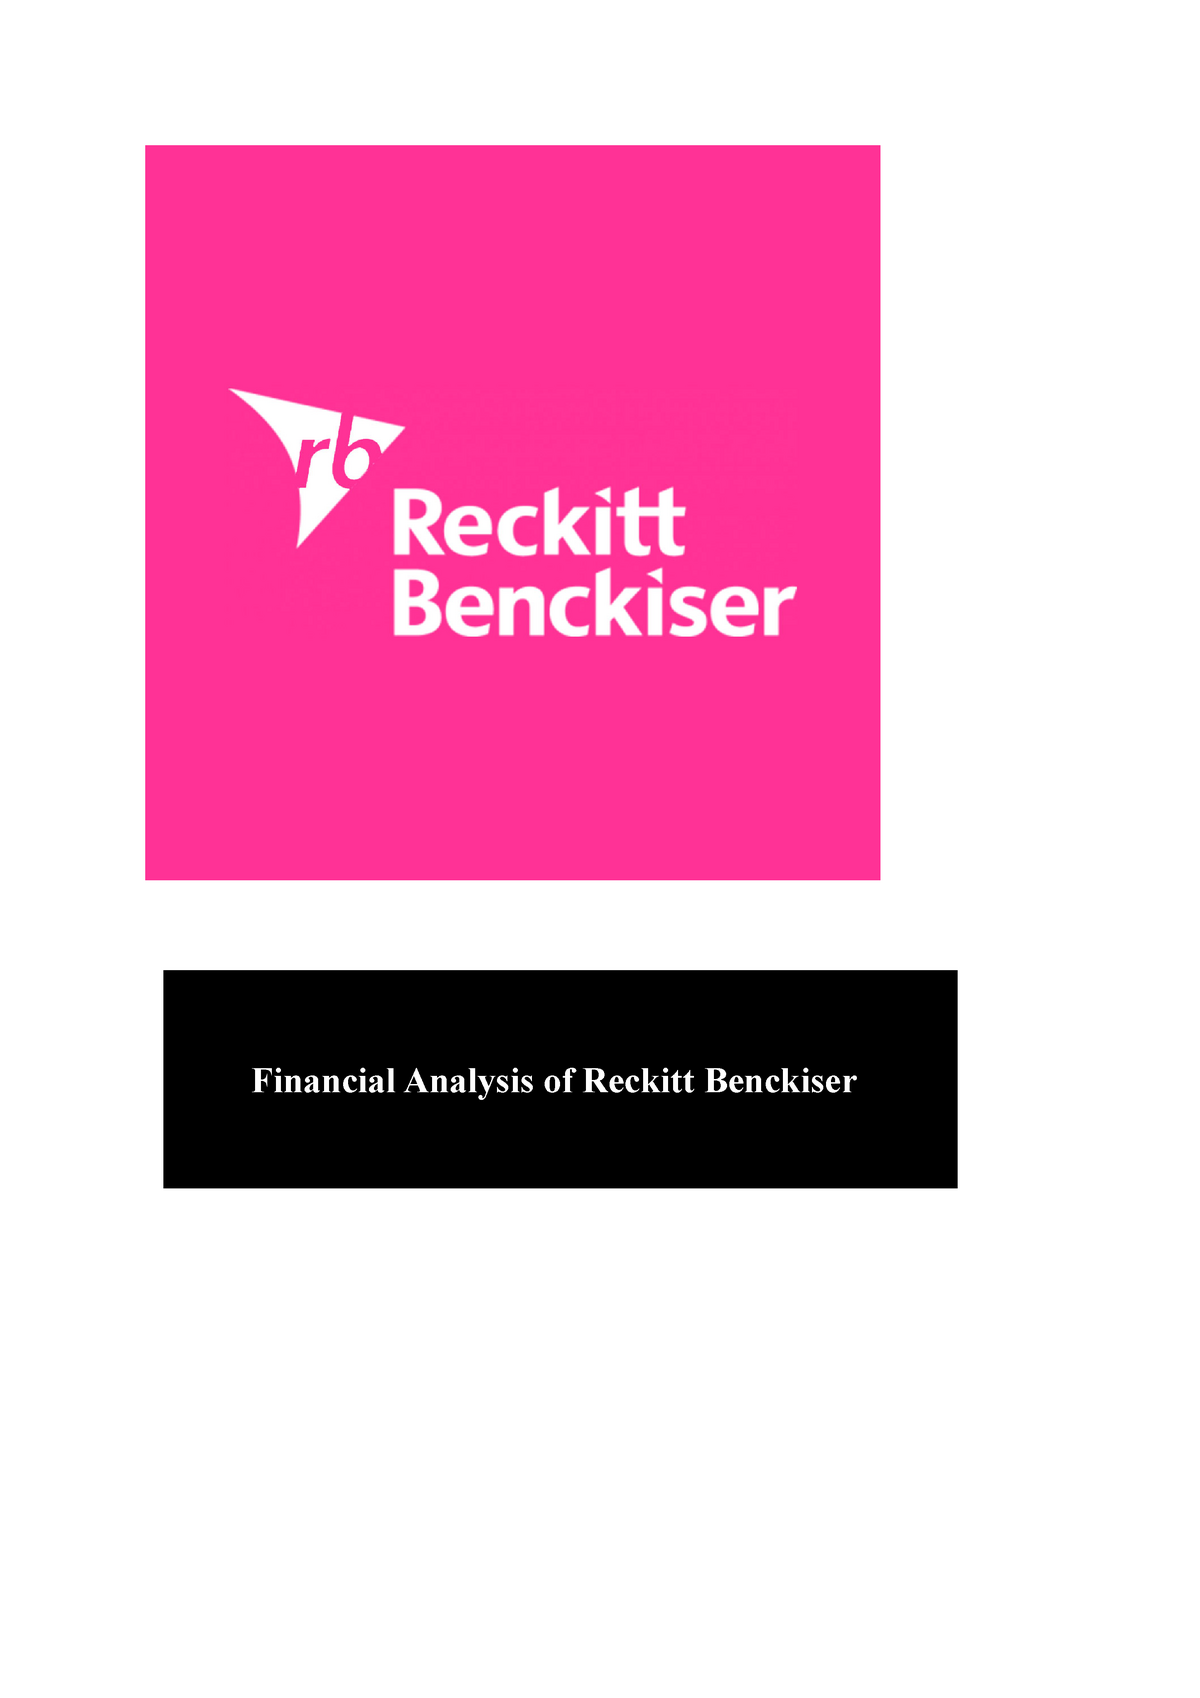 FiinancialAnalysisofReckittBenckiser Financial Analysis of